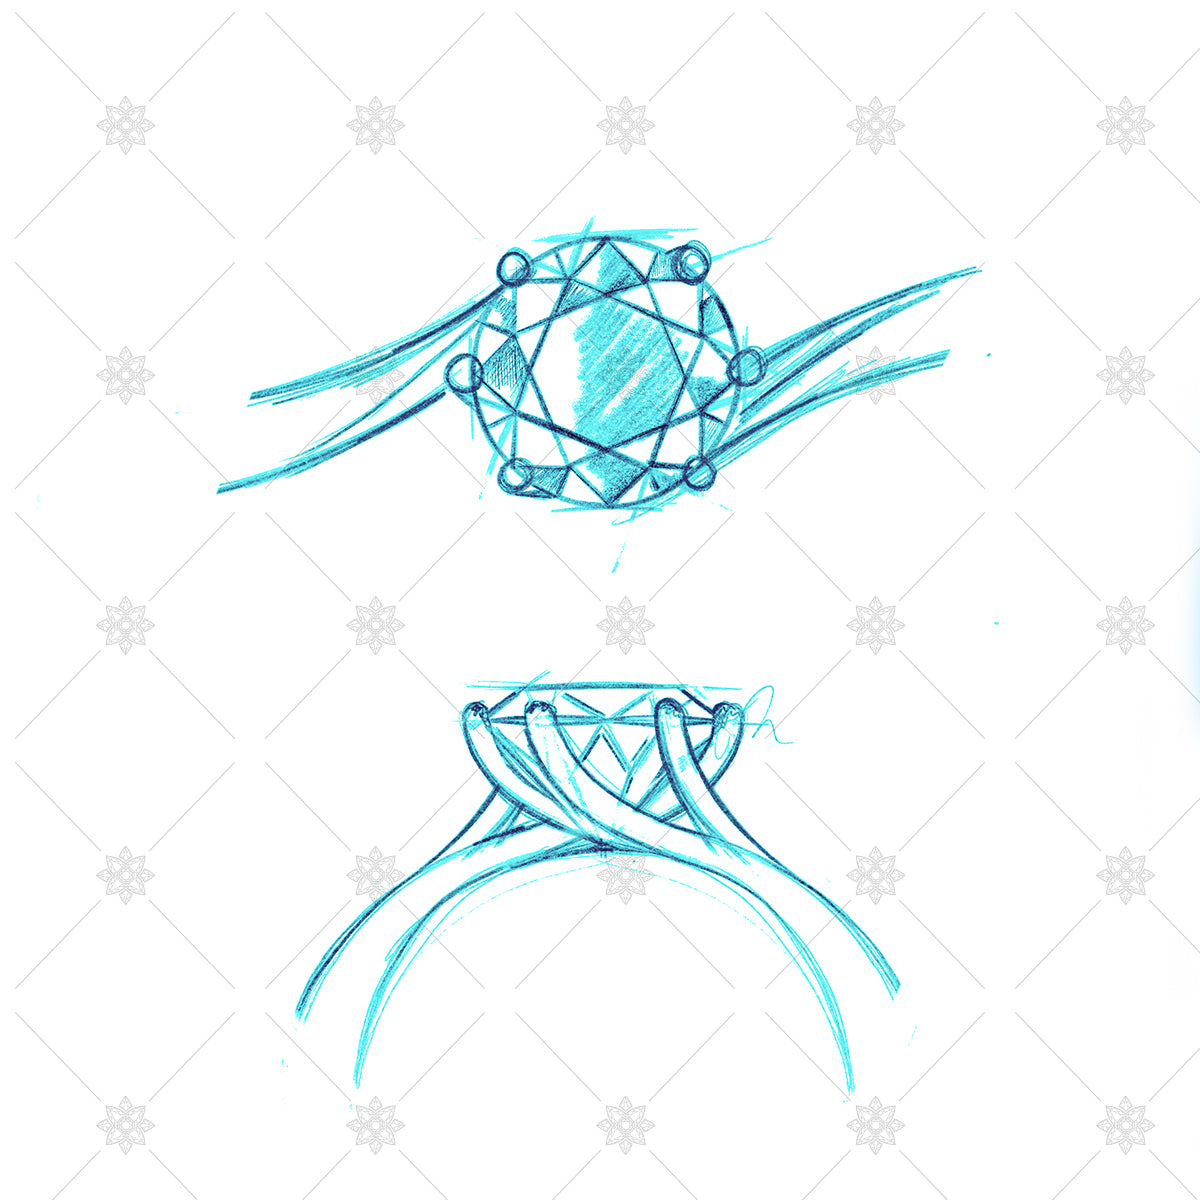 Diamond ring pencil sketch coloured drwaing